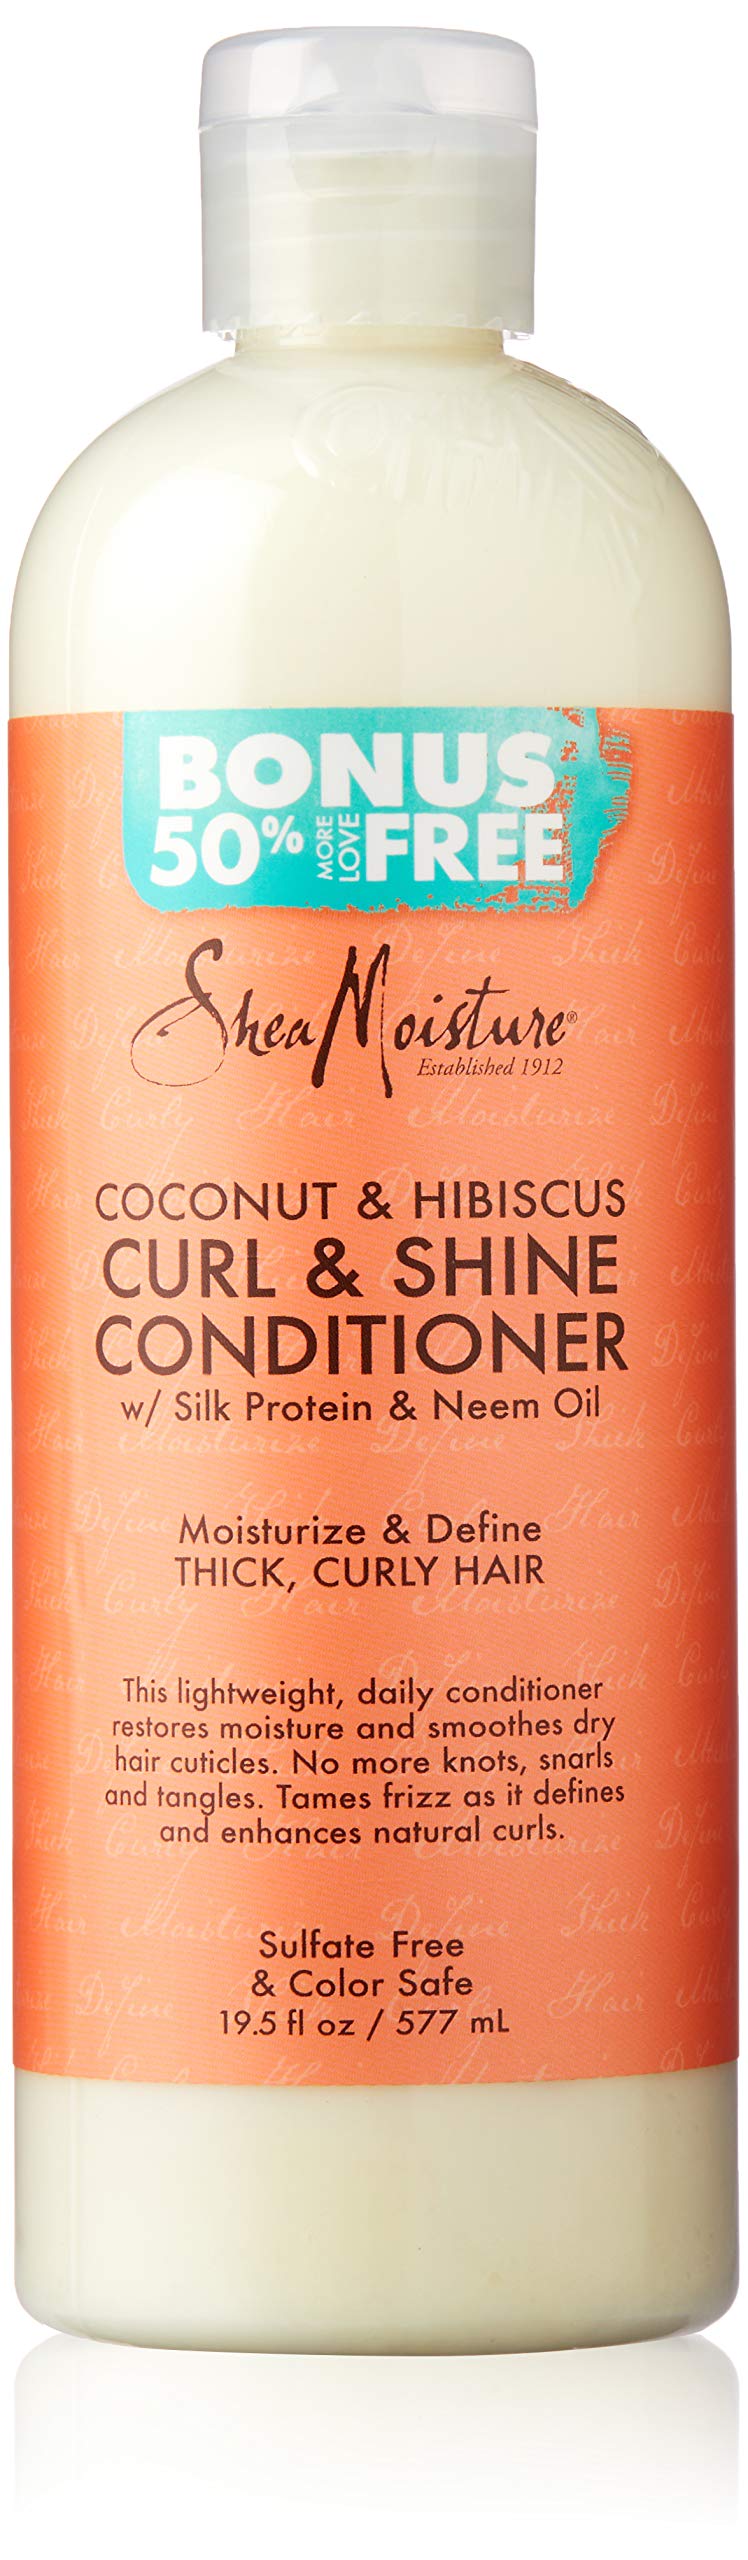 Shea Moisture Shea Moisture Coconut & Hibiscus Curl & Shine Conditioner [Bonus 50% Free] 19.5 oz